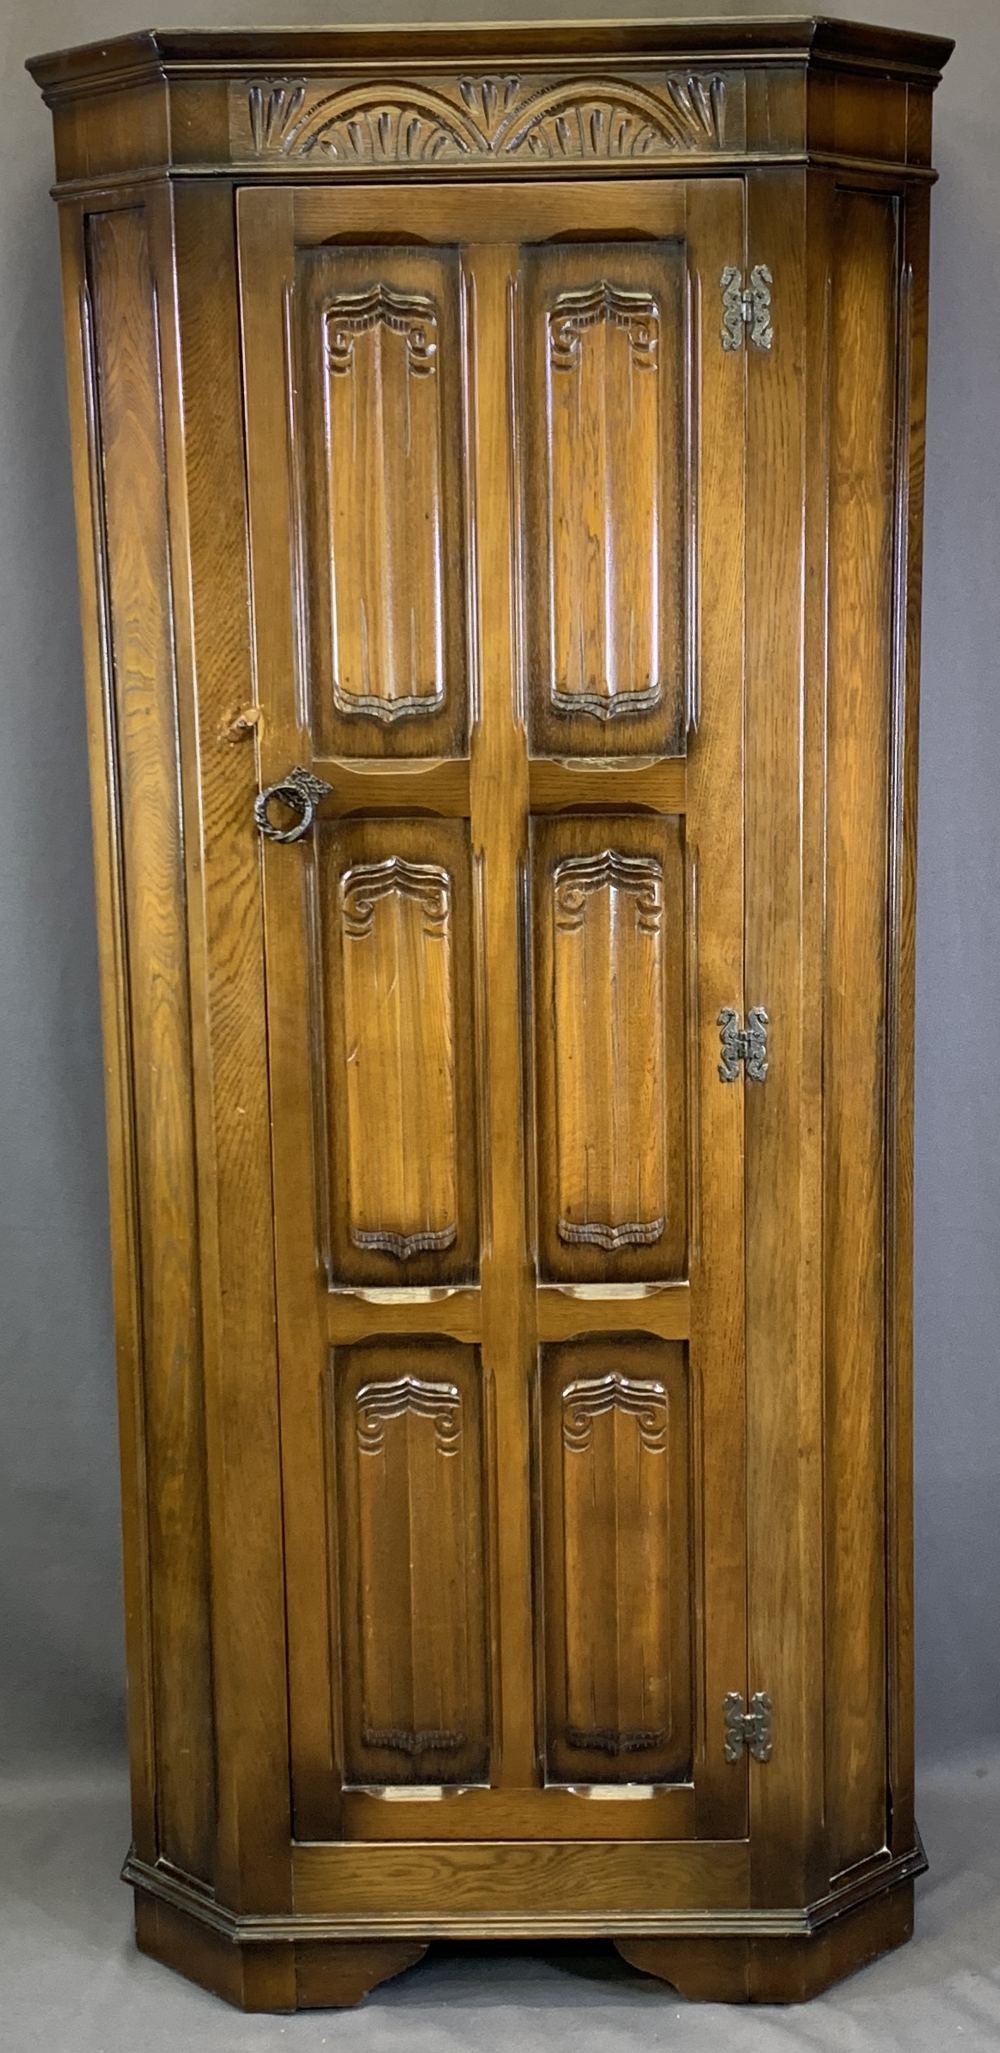 PRIORY STYLE SINGLE DOOR HALL ROBE - 177cms H, 88cms W, 40cms D